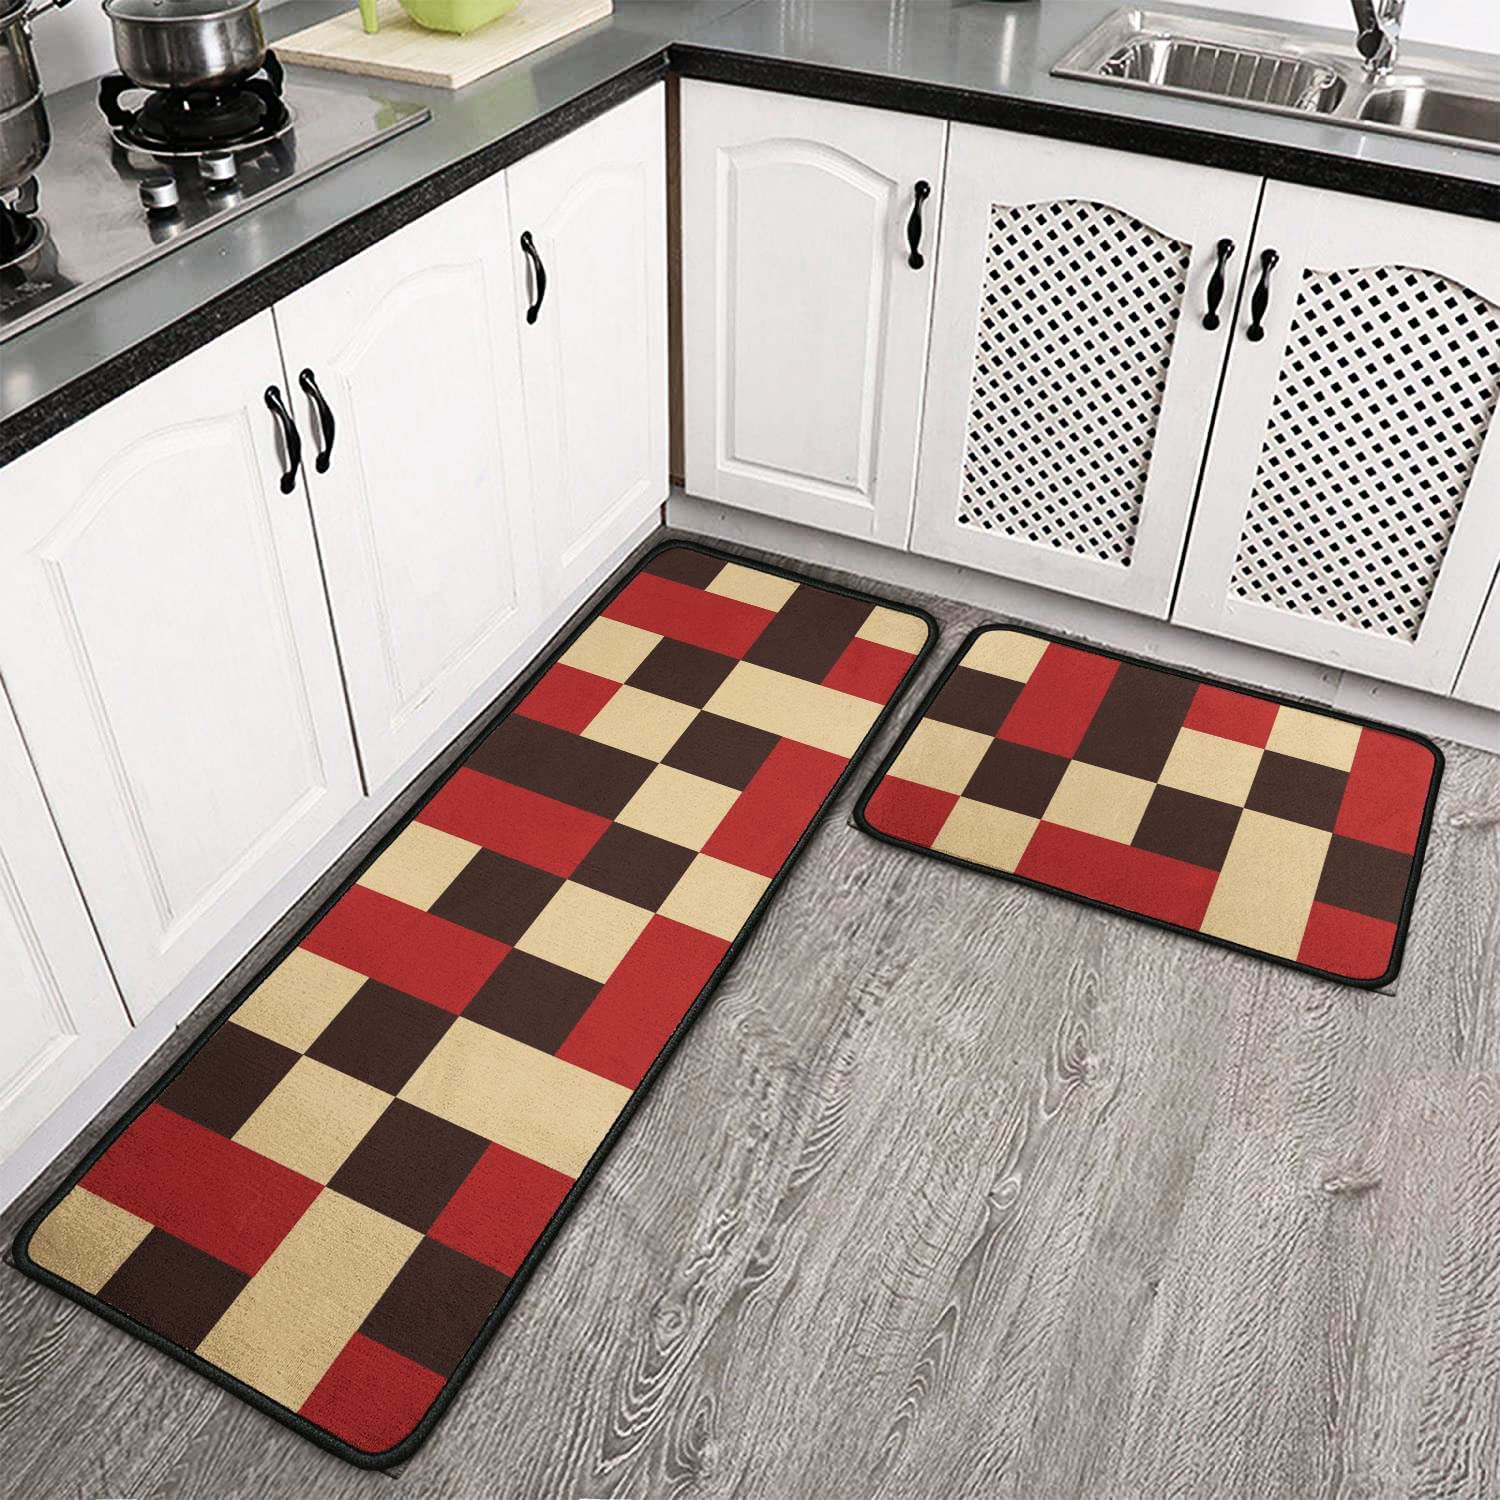 Logieut Red Black Grey White Kitchen Rug Set of 2, Modern Abstract Kitchen Floor Mat Rugs Carpet- Geometric Black White Red Kitchen Decor and Accessories